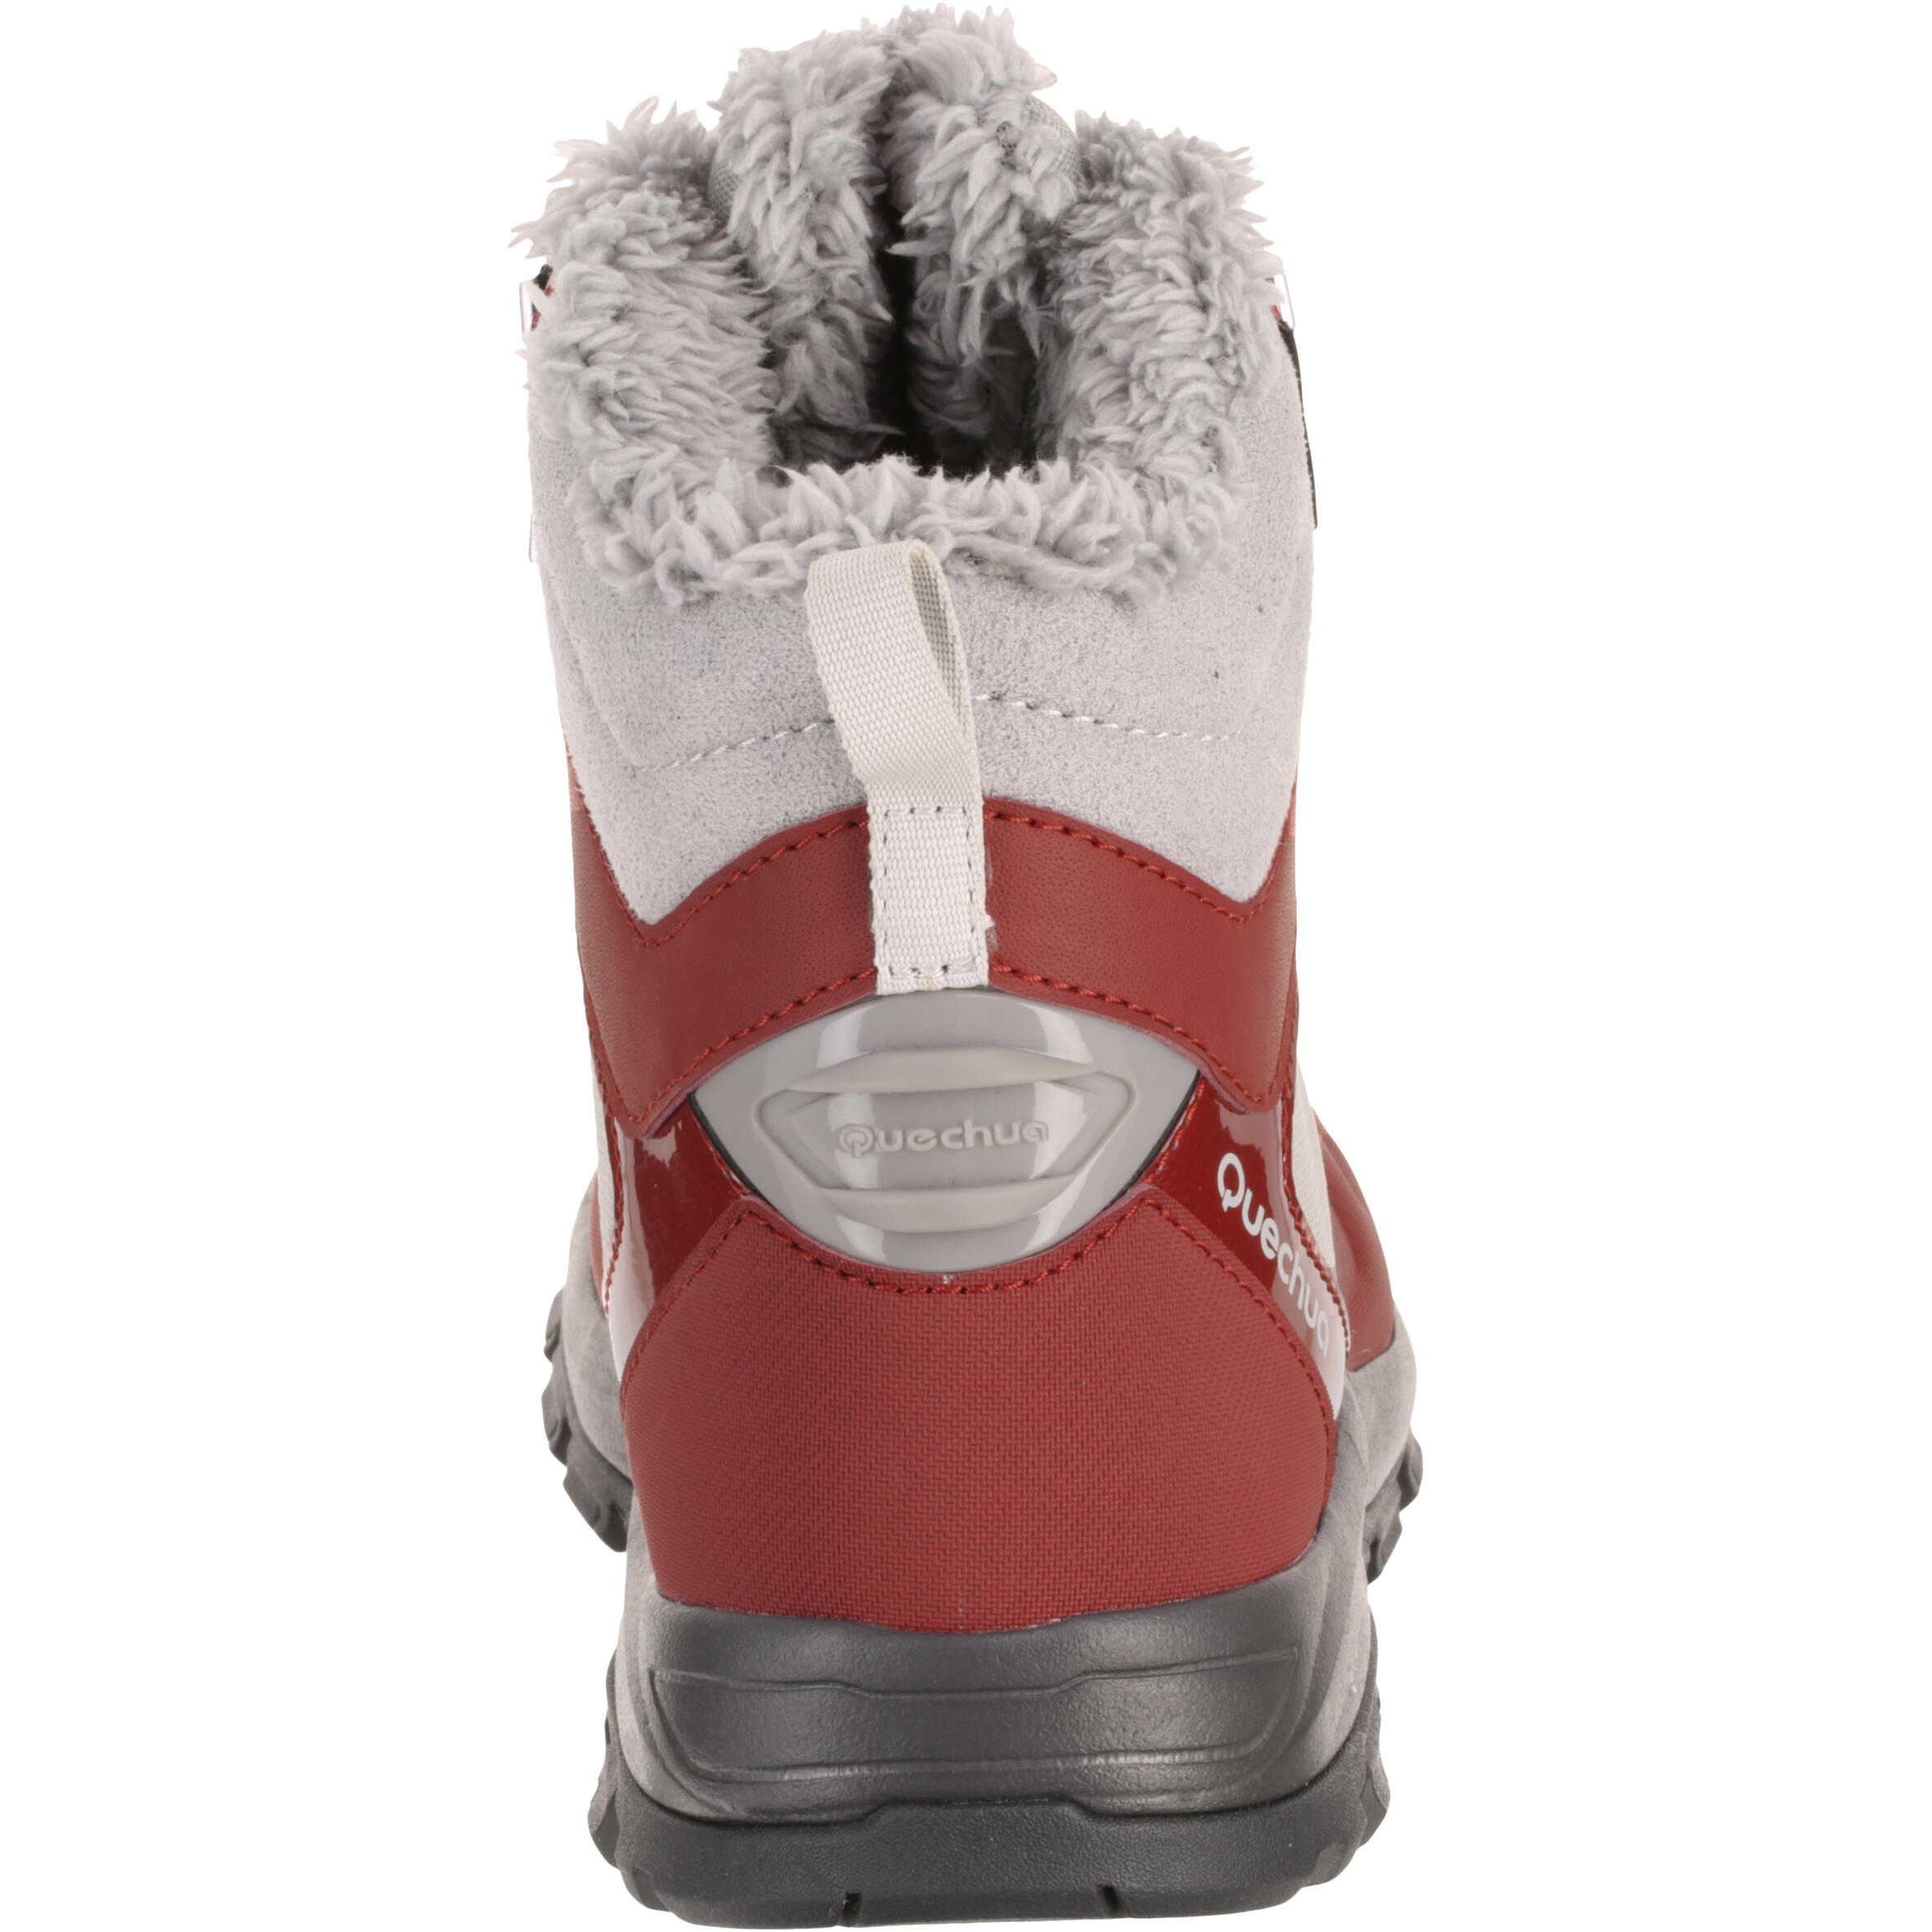 Forclaz 500 Waterproof Women'S Hiking Boots - Burgundy 10/16